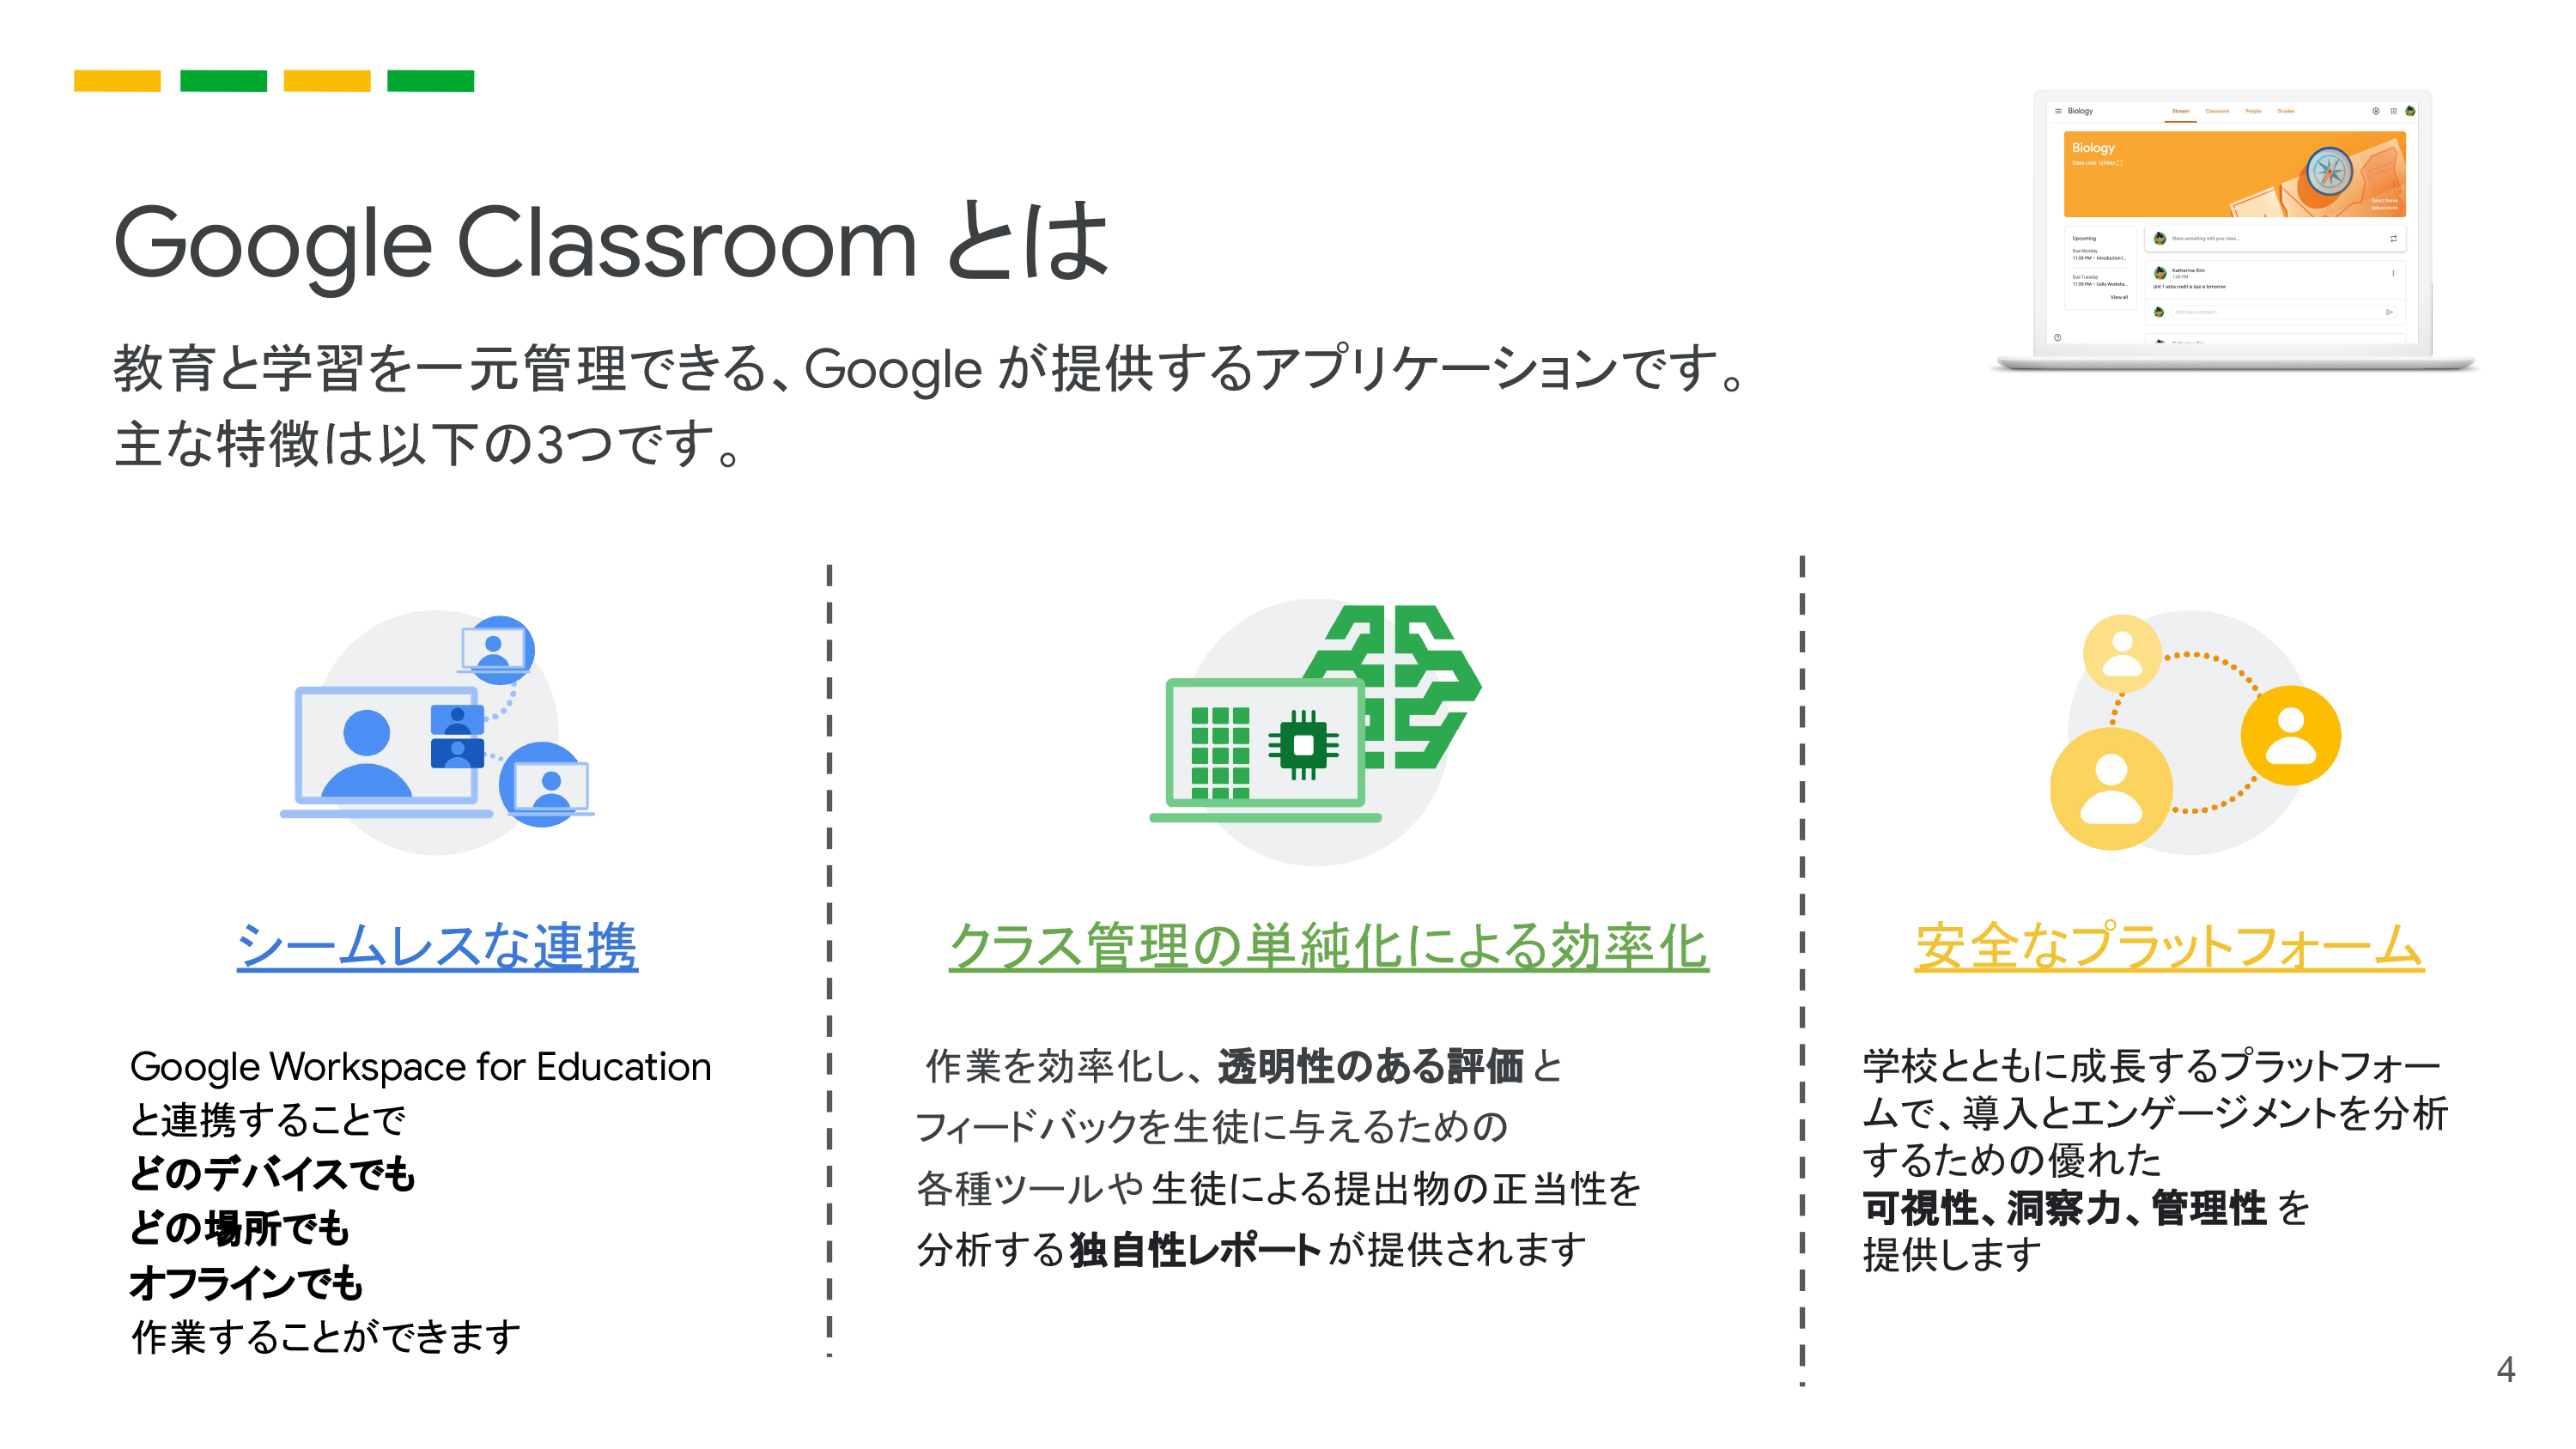 Google Classroom を円滑に運営するための4つのポイント4